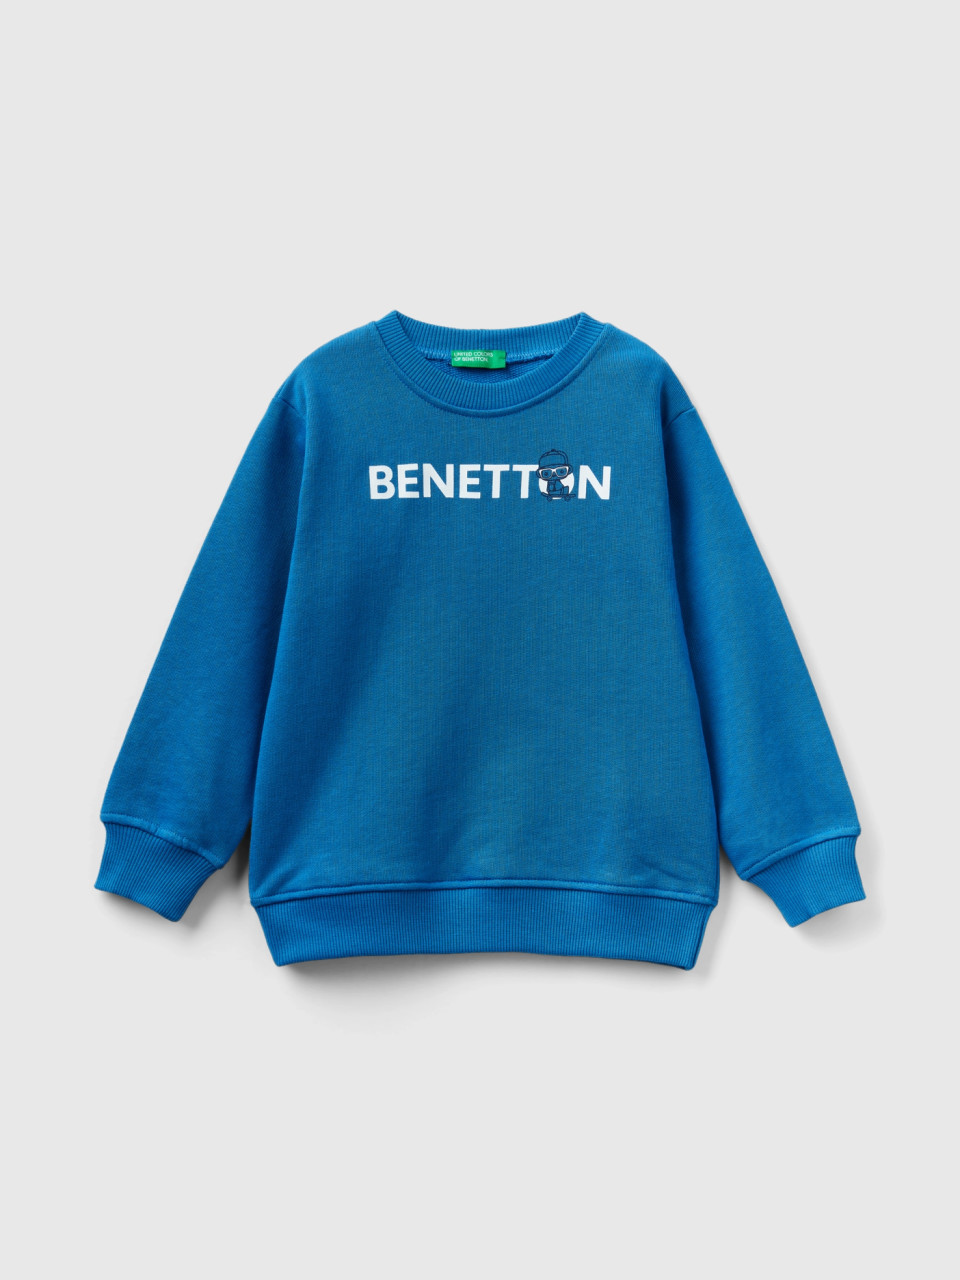 Benetton, Sweatshirt In 100% Organic Cotton, Blue, Kids